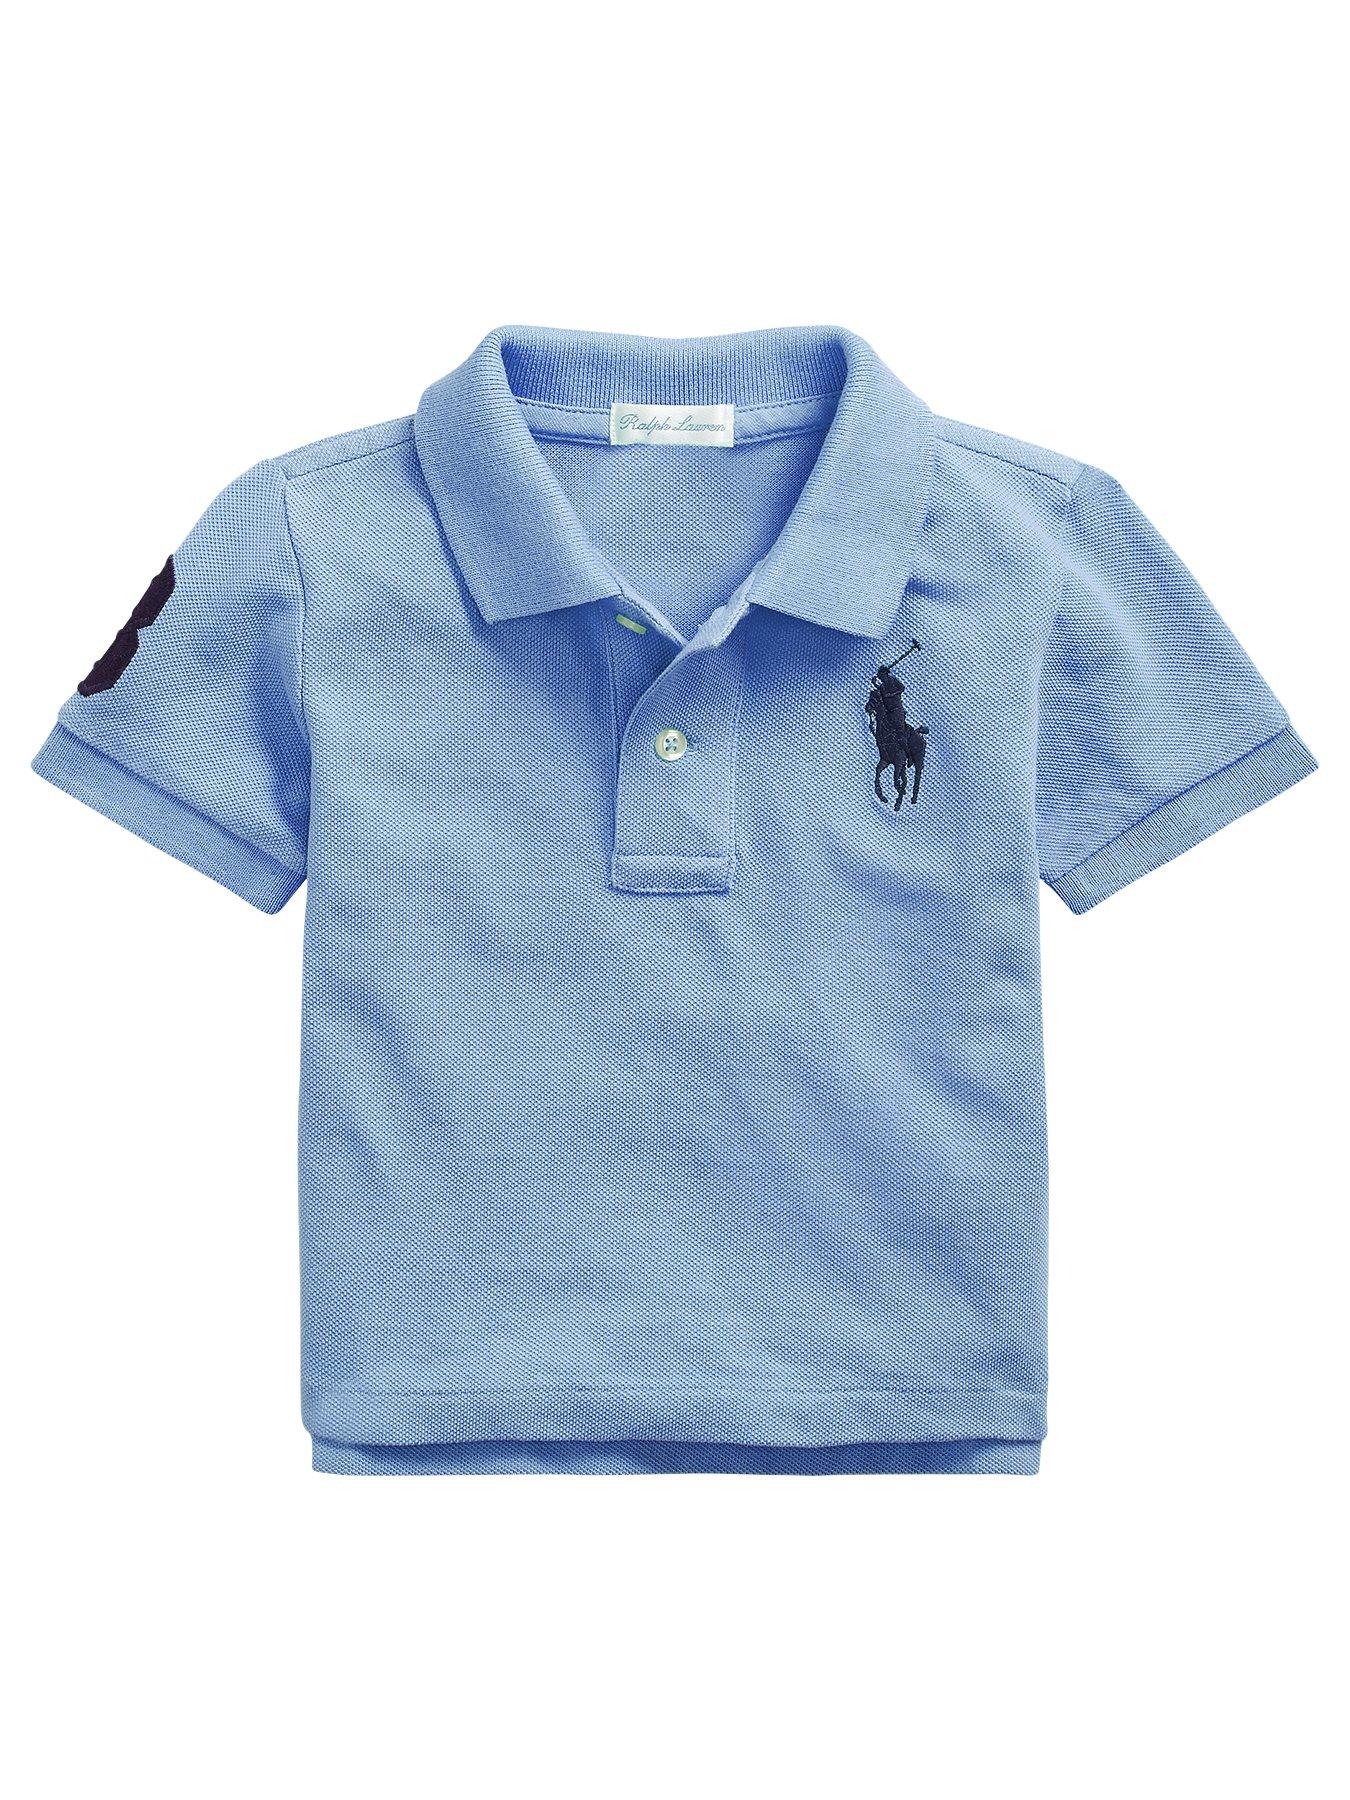 ralph lauren childrens polo shirts sale